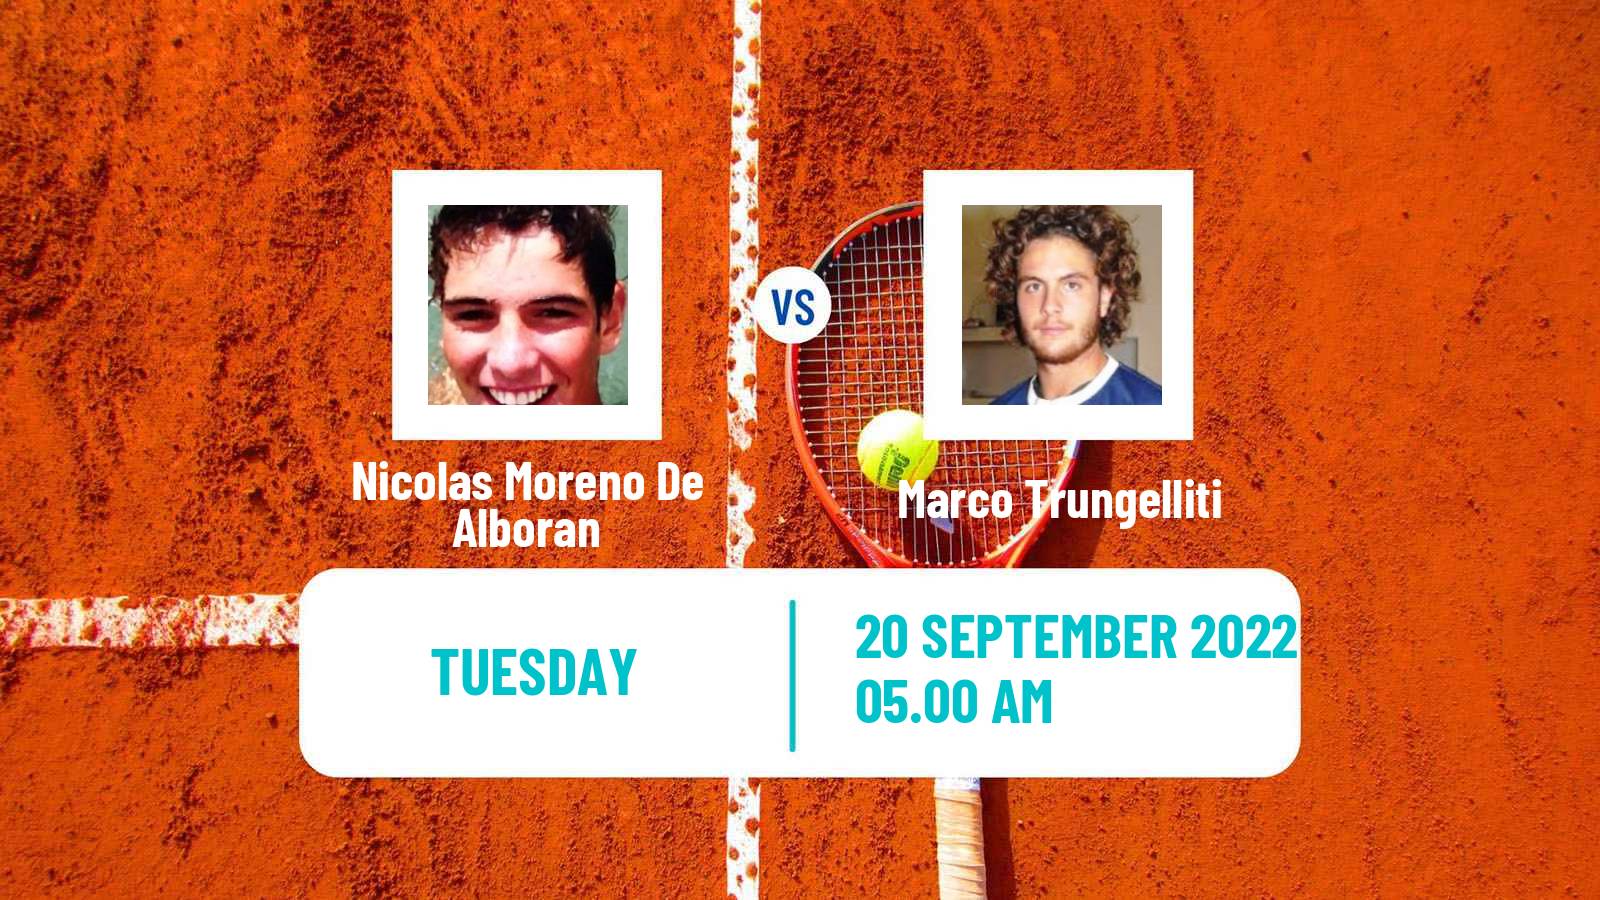 Tennis ATP Challenger Nicolas Moreno De Alboran - Marco Trungelliti